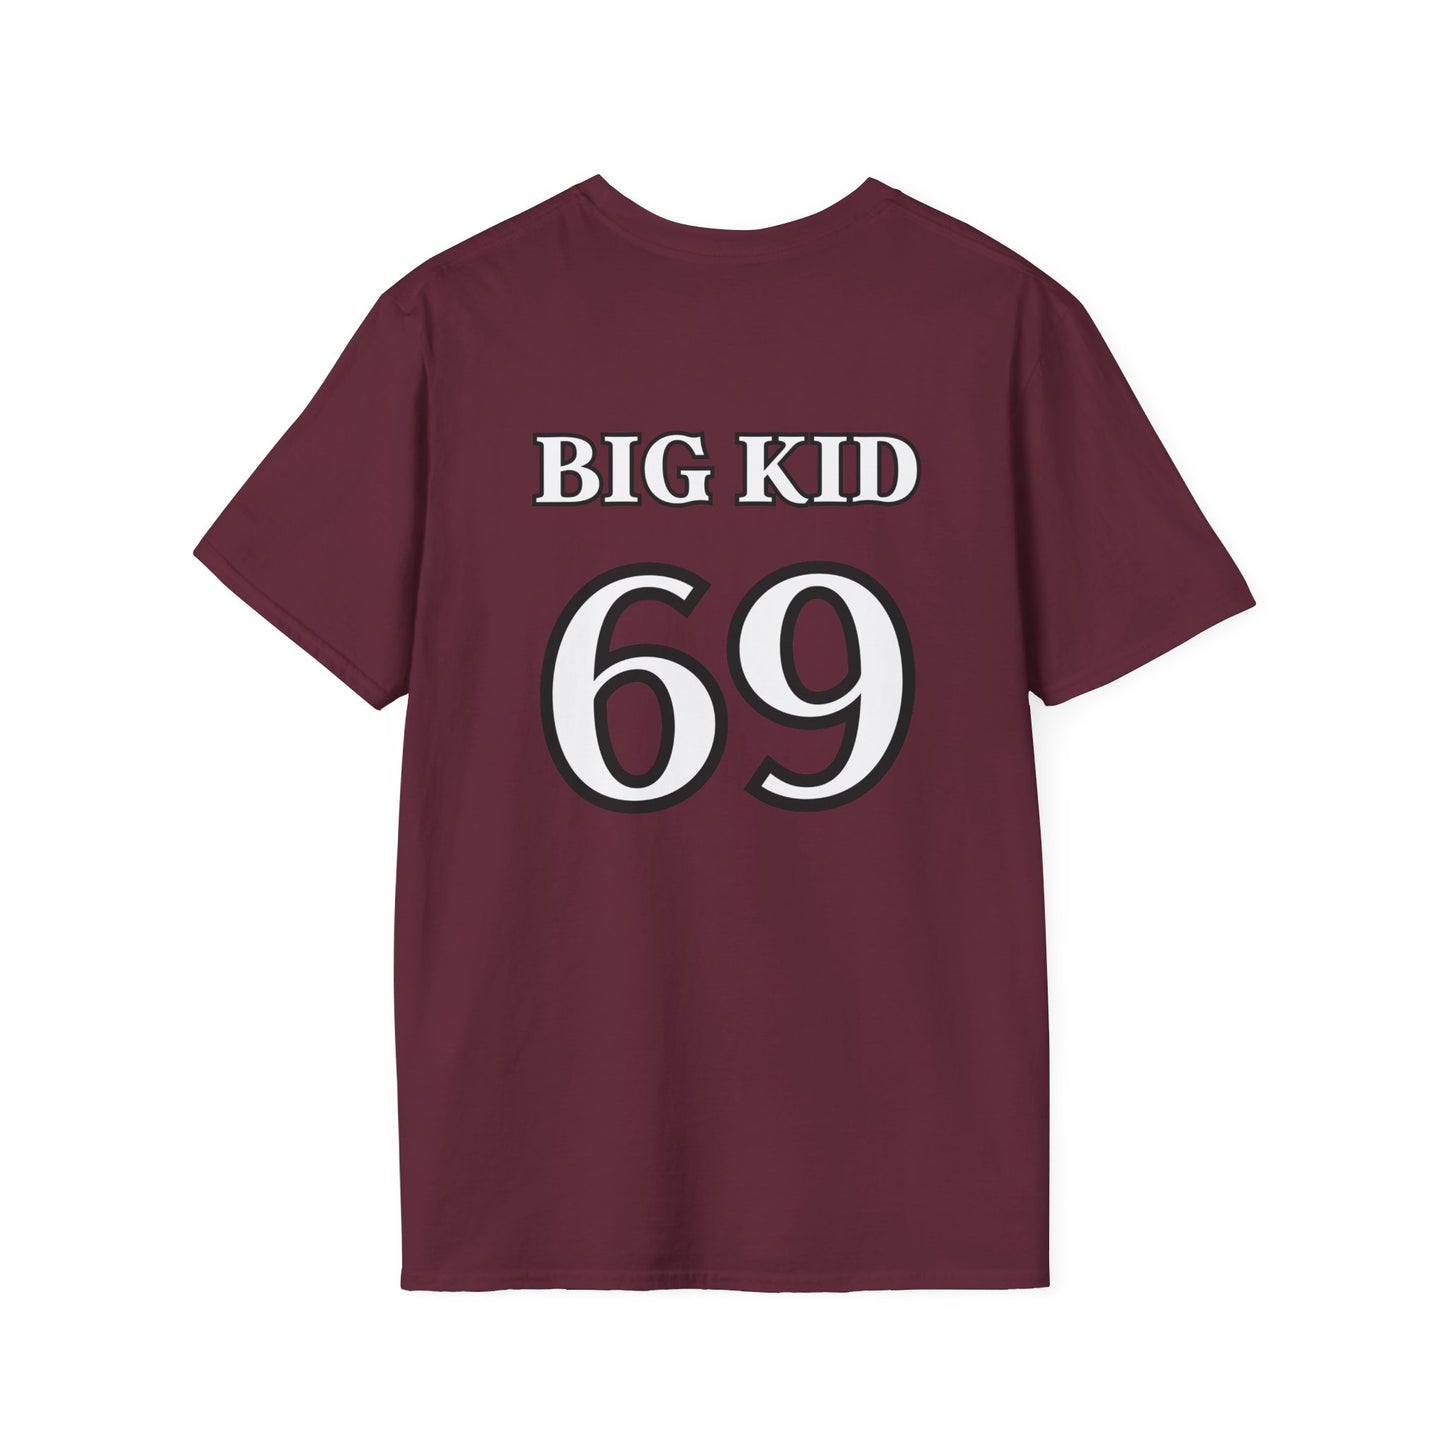 BIG KID 69 - tee x Sarah Words Collection